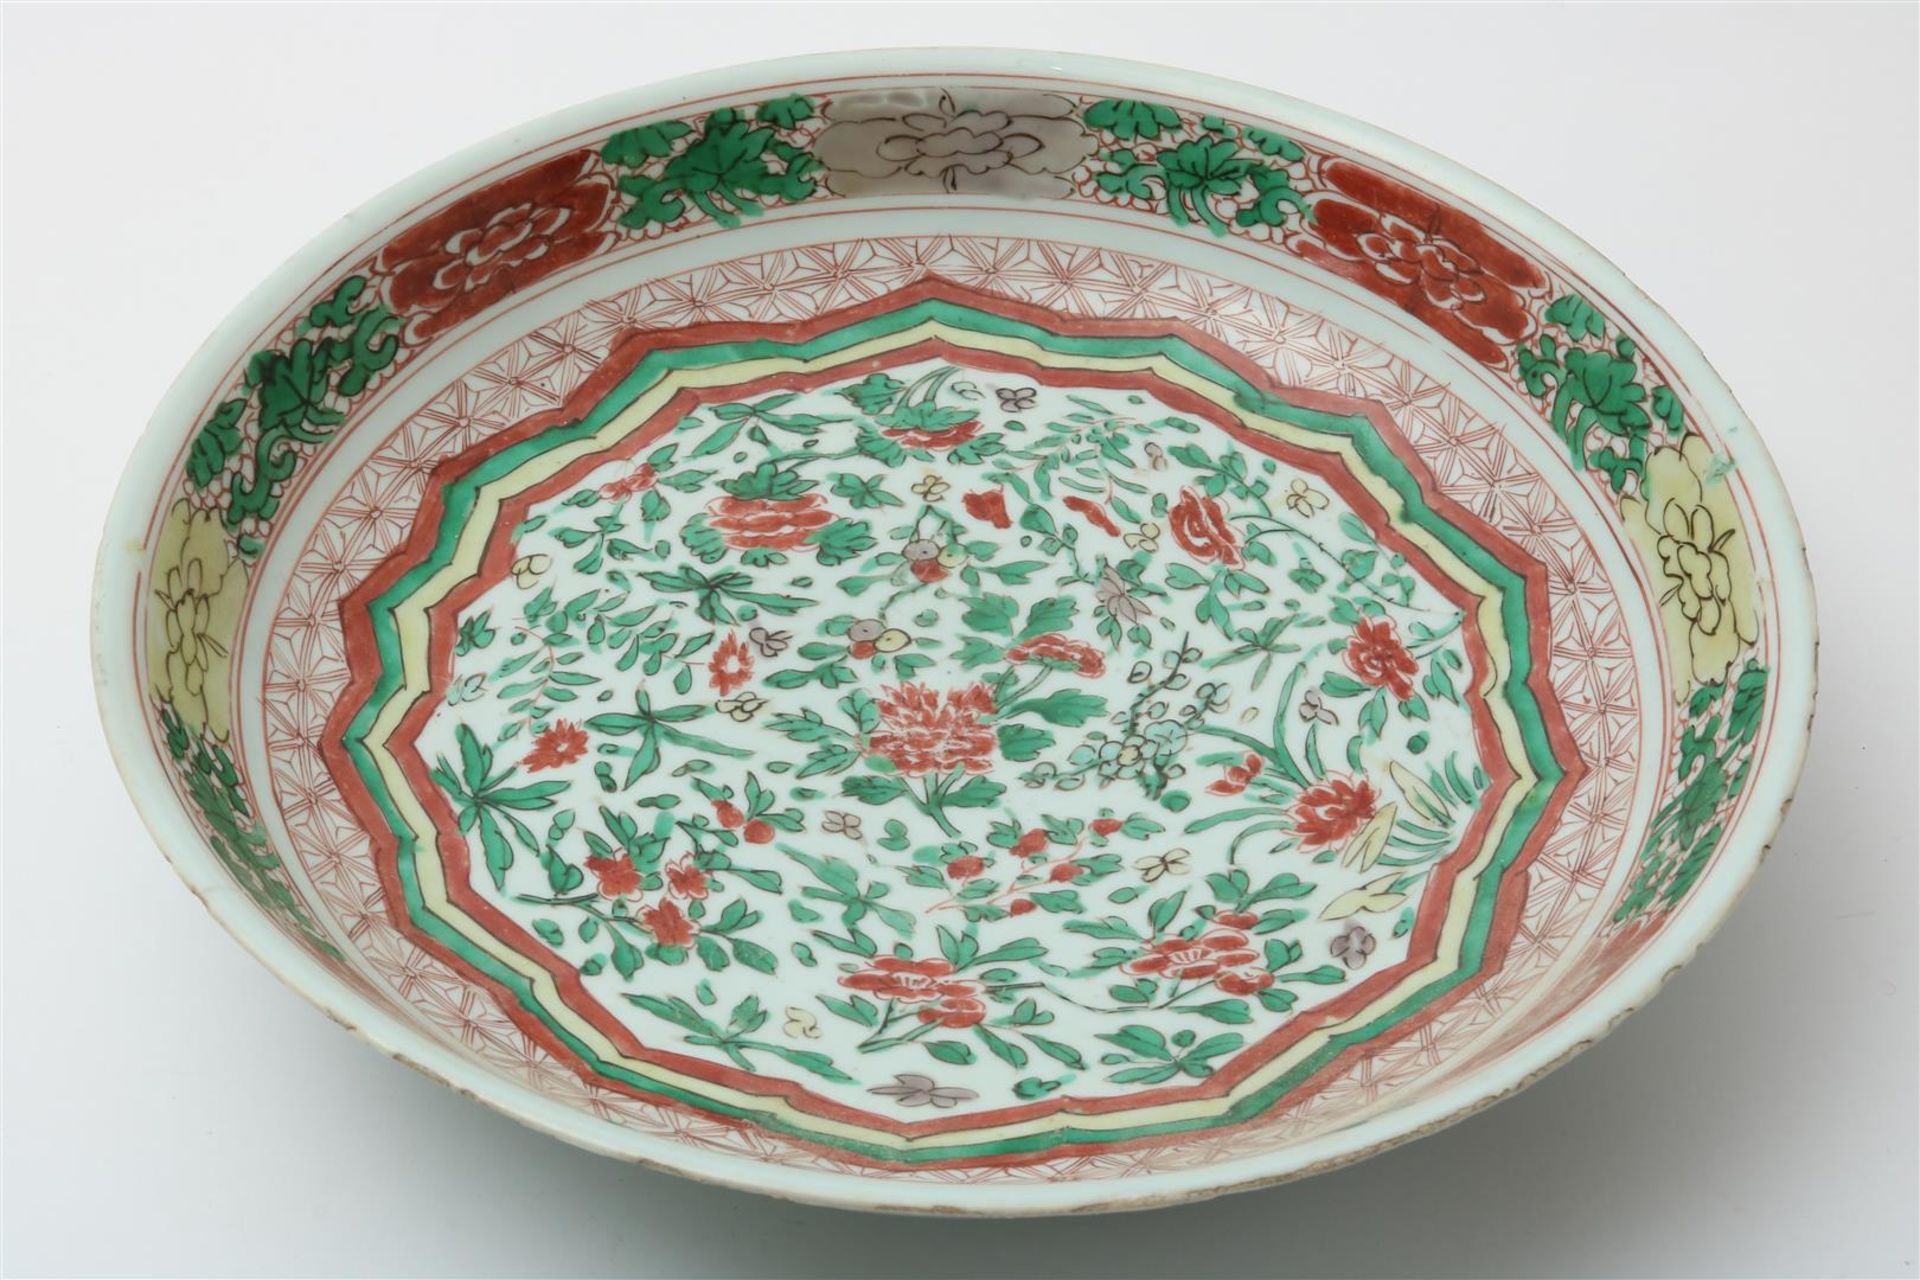 Porcelain Kangxi round dish with Famille Verte decor, diam. 33.5 cm. China, 18th century (with